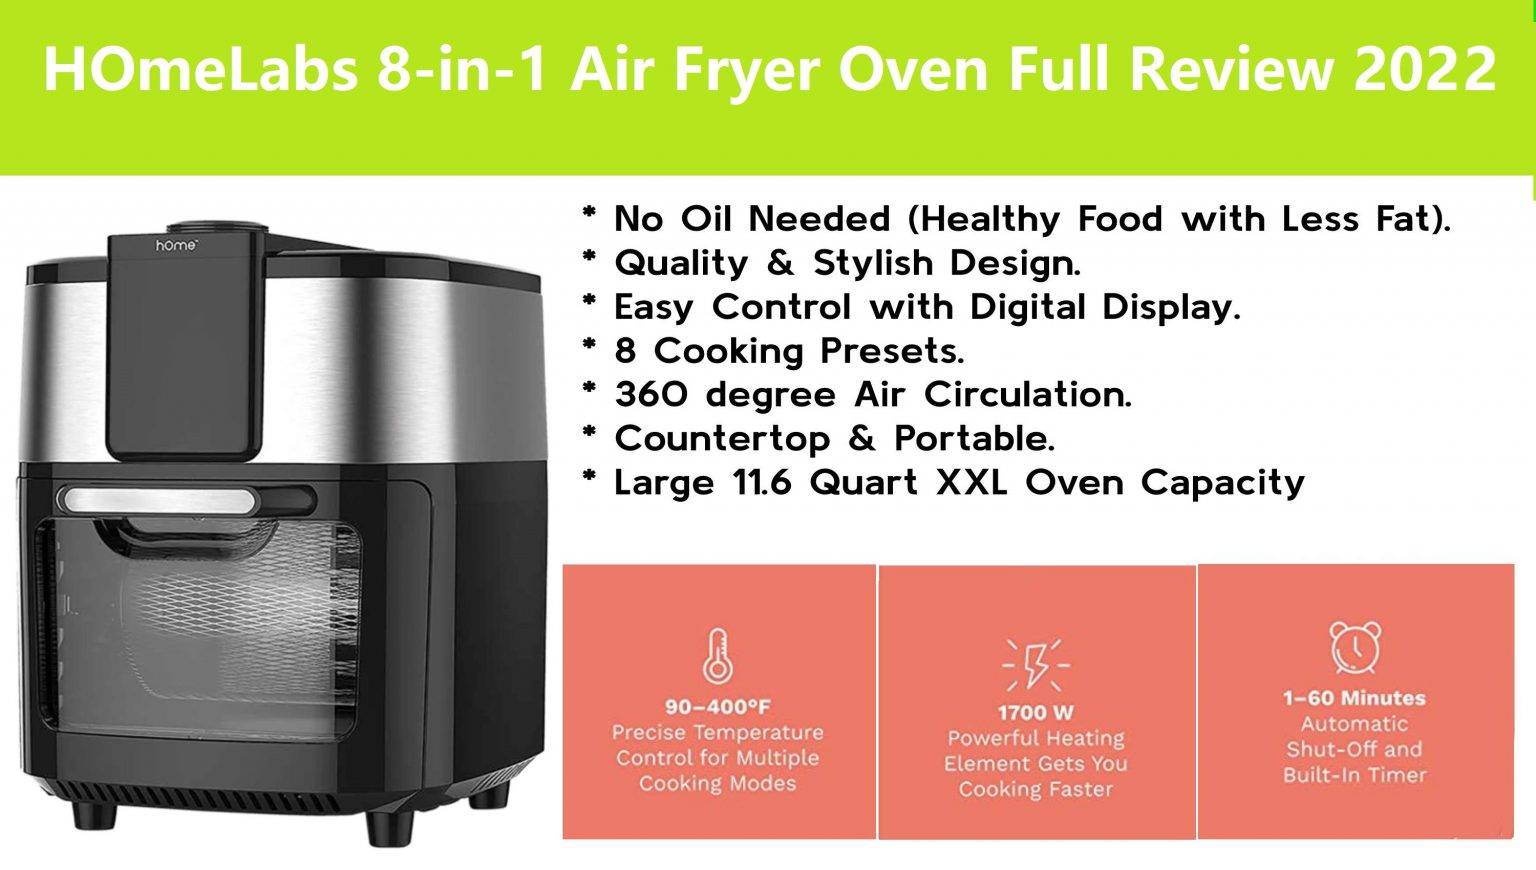 HOmeLabs 11.6 Quart XXL 8-in-1 Air Fryer Oven Full Review 2022